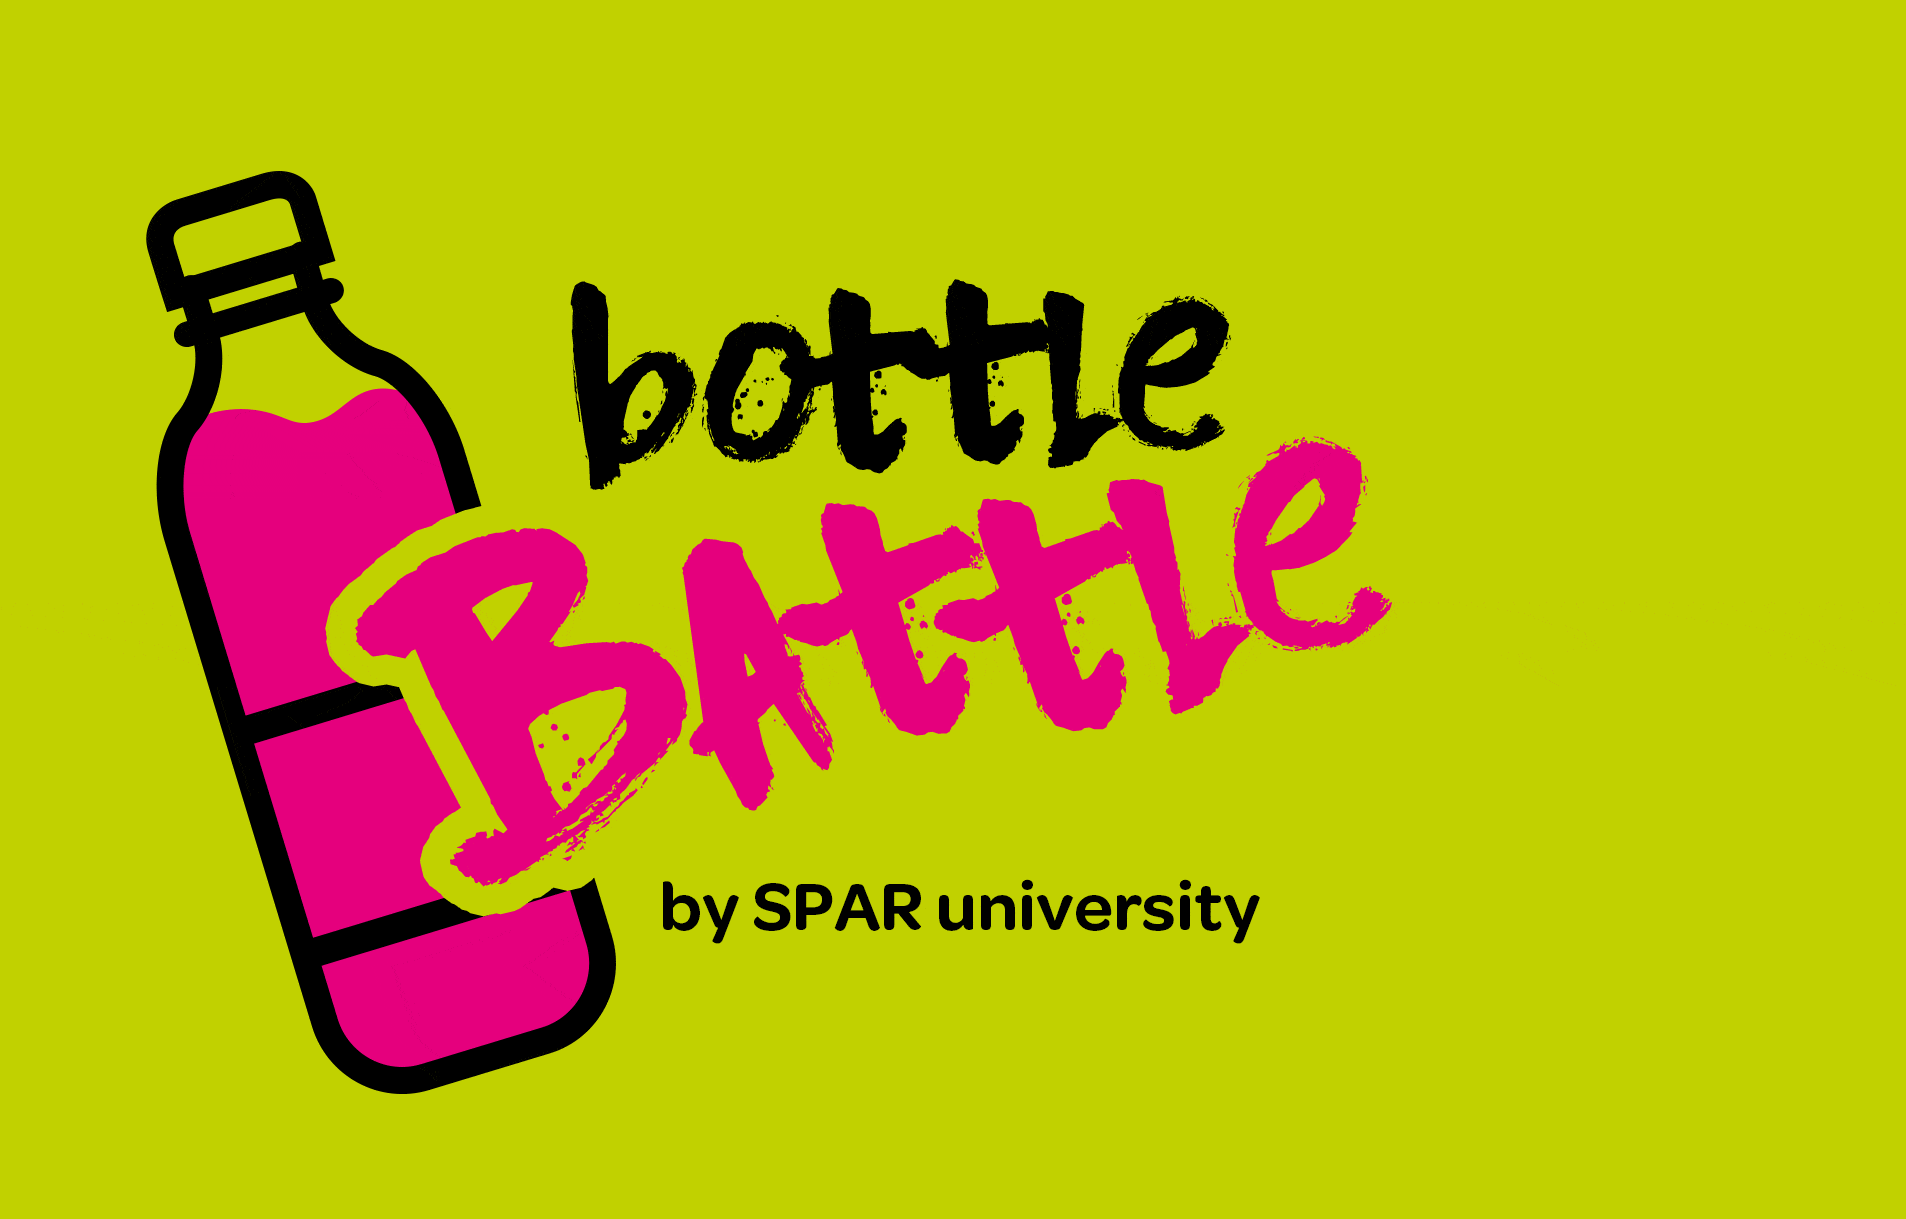 //sparuniversity.wpengine.com/wp-content/uploads/2019/04/Bottle-battle-animatie.gif